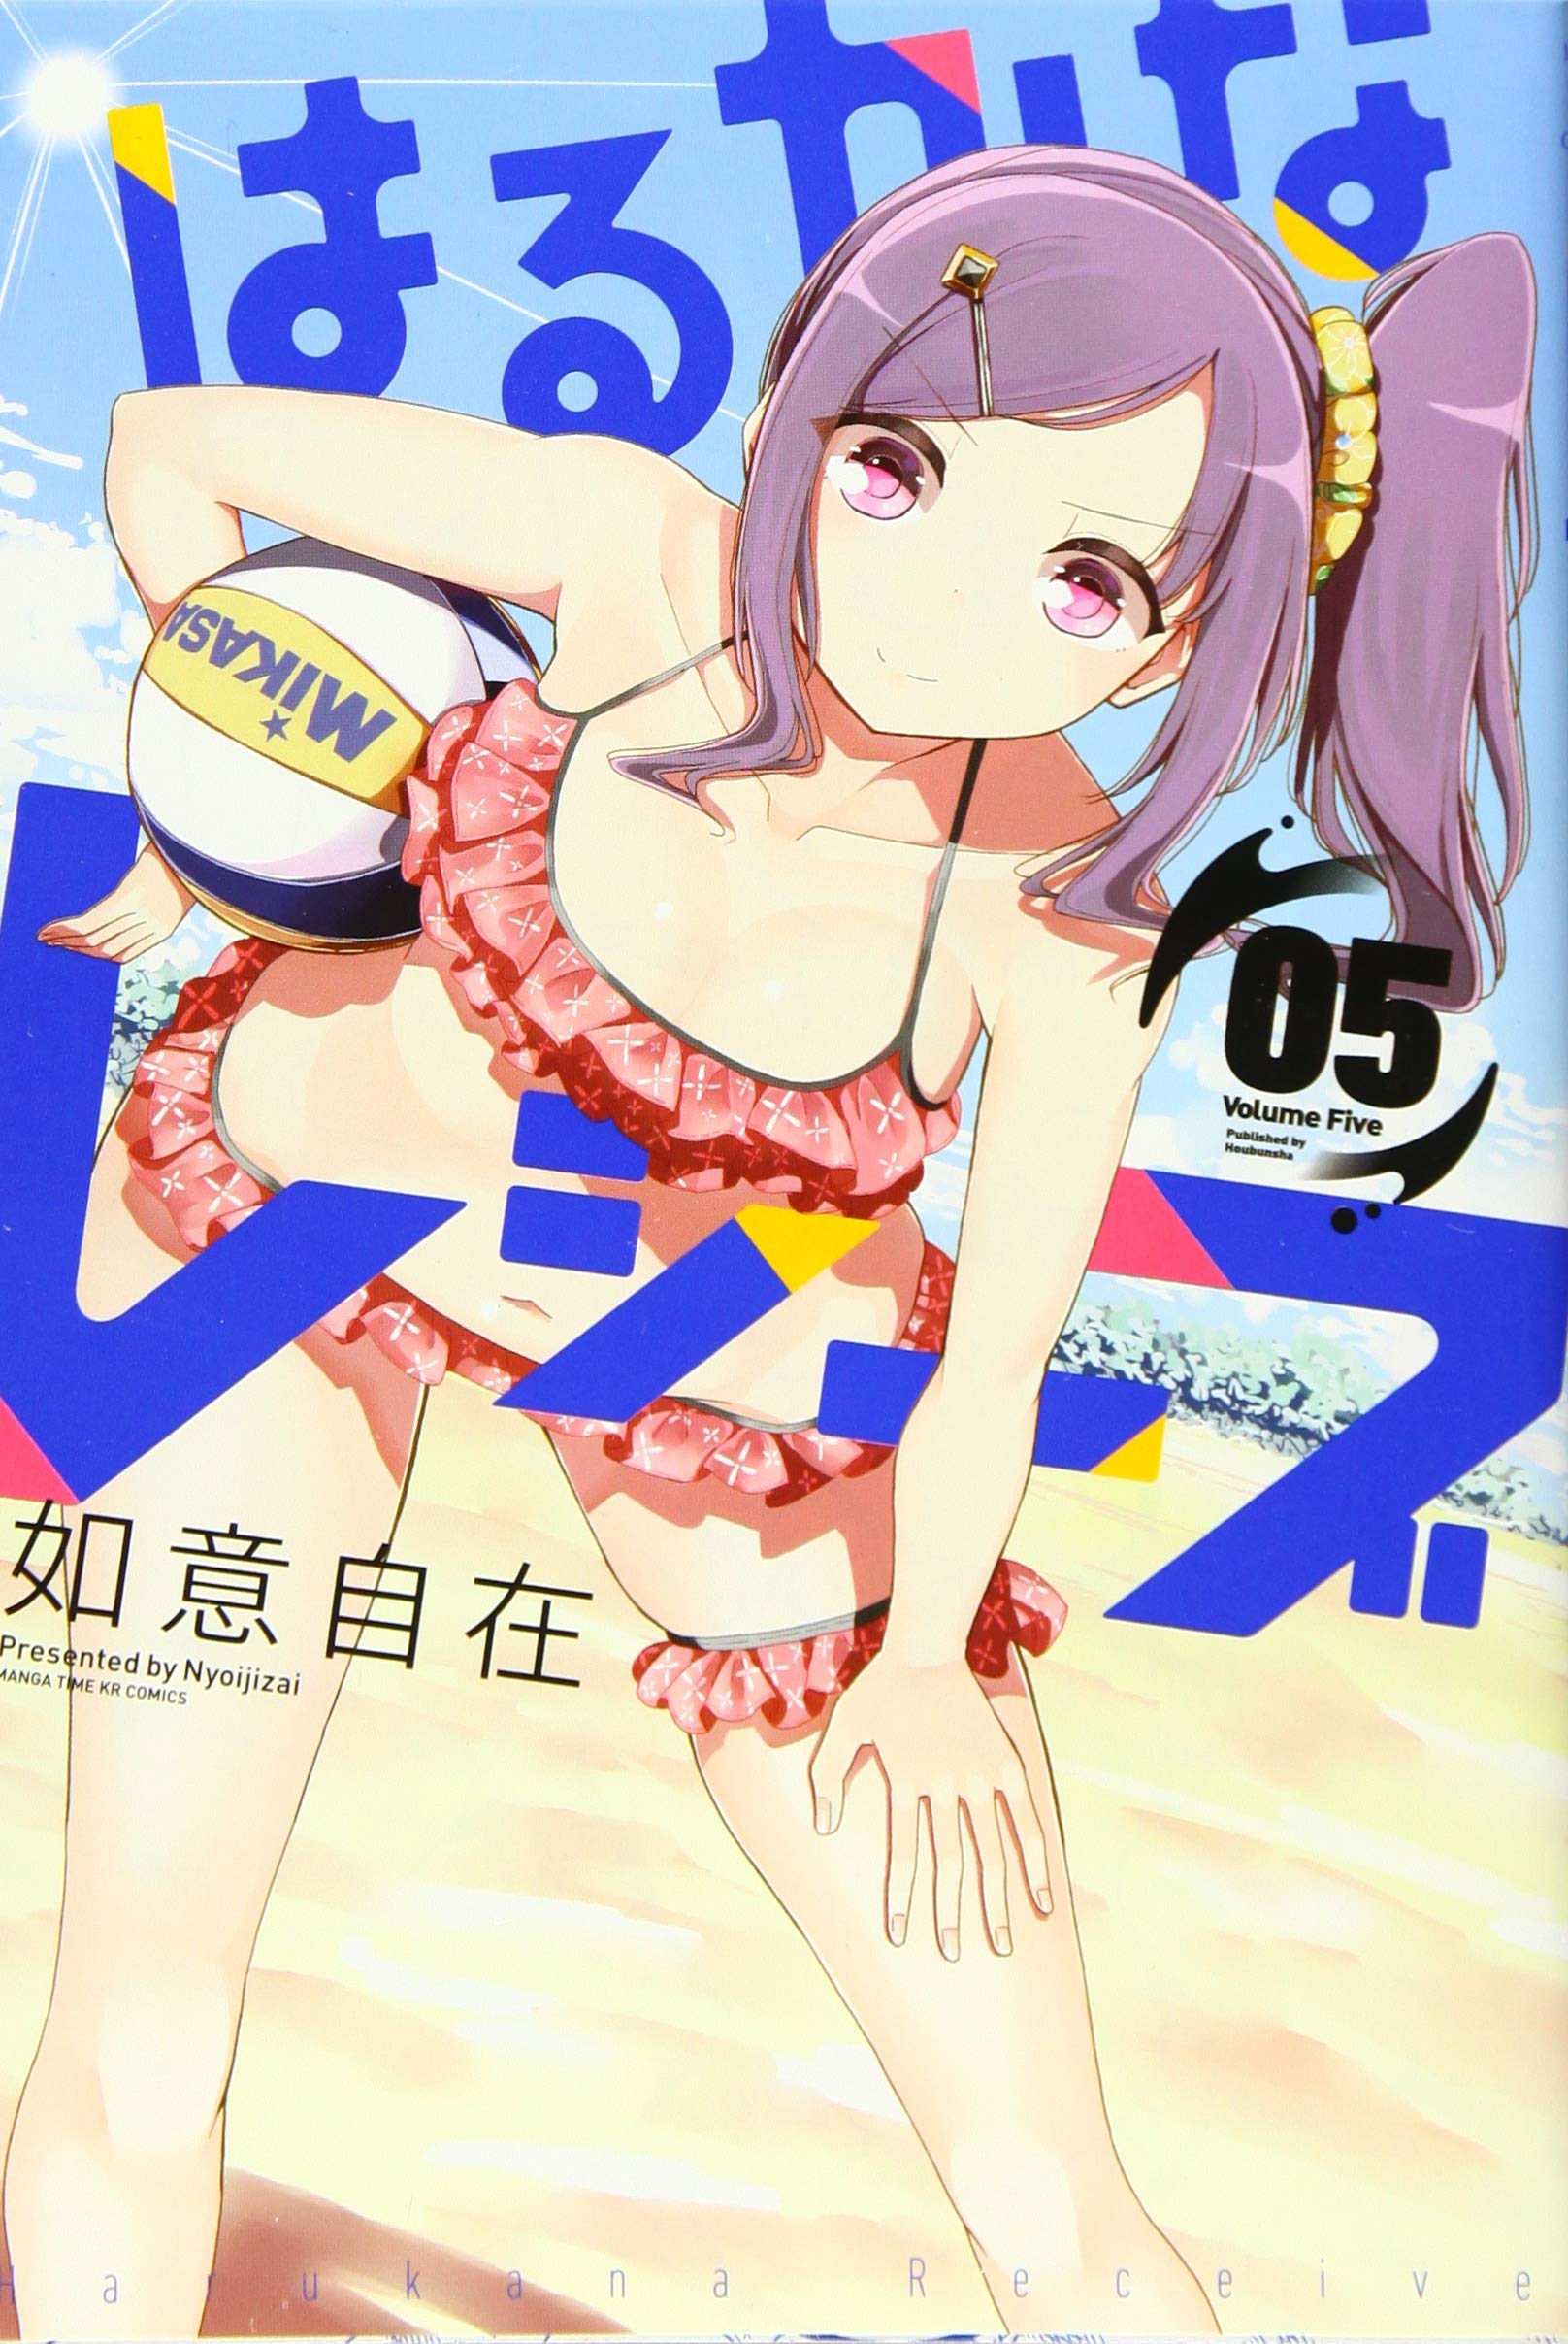 Seven Seas Entertainment on X: HARUKANA RECEIVE Vol. 8